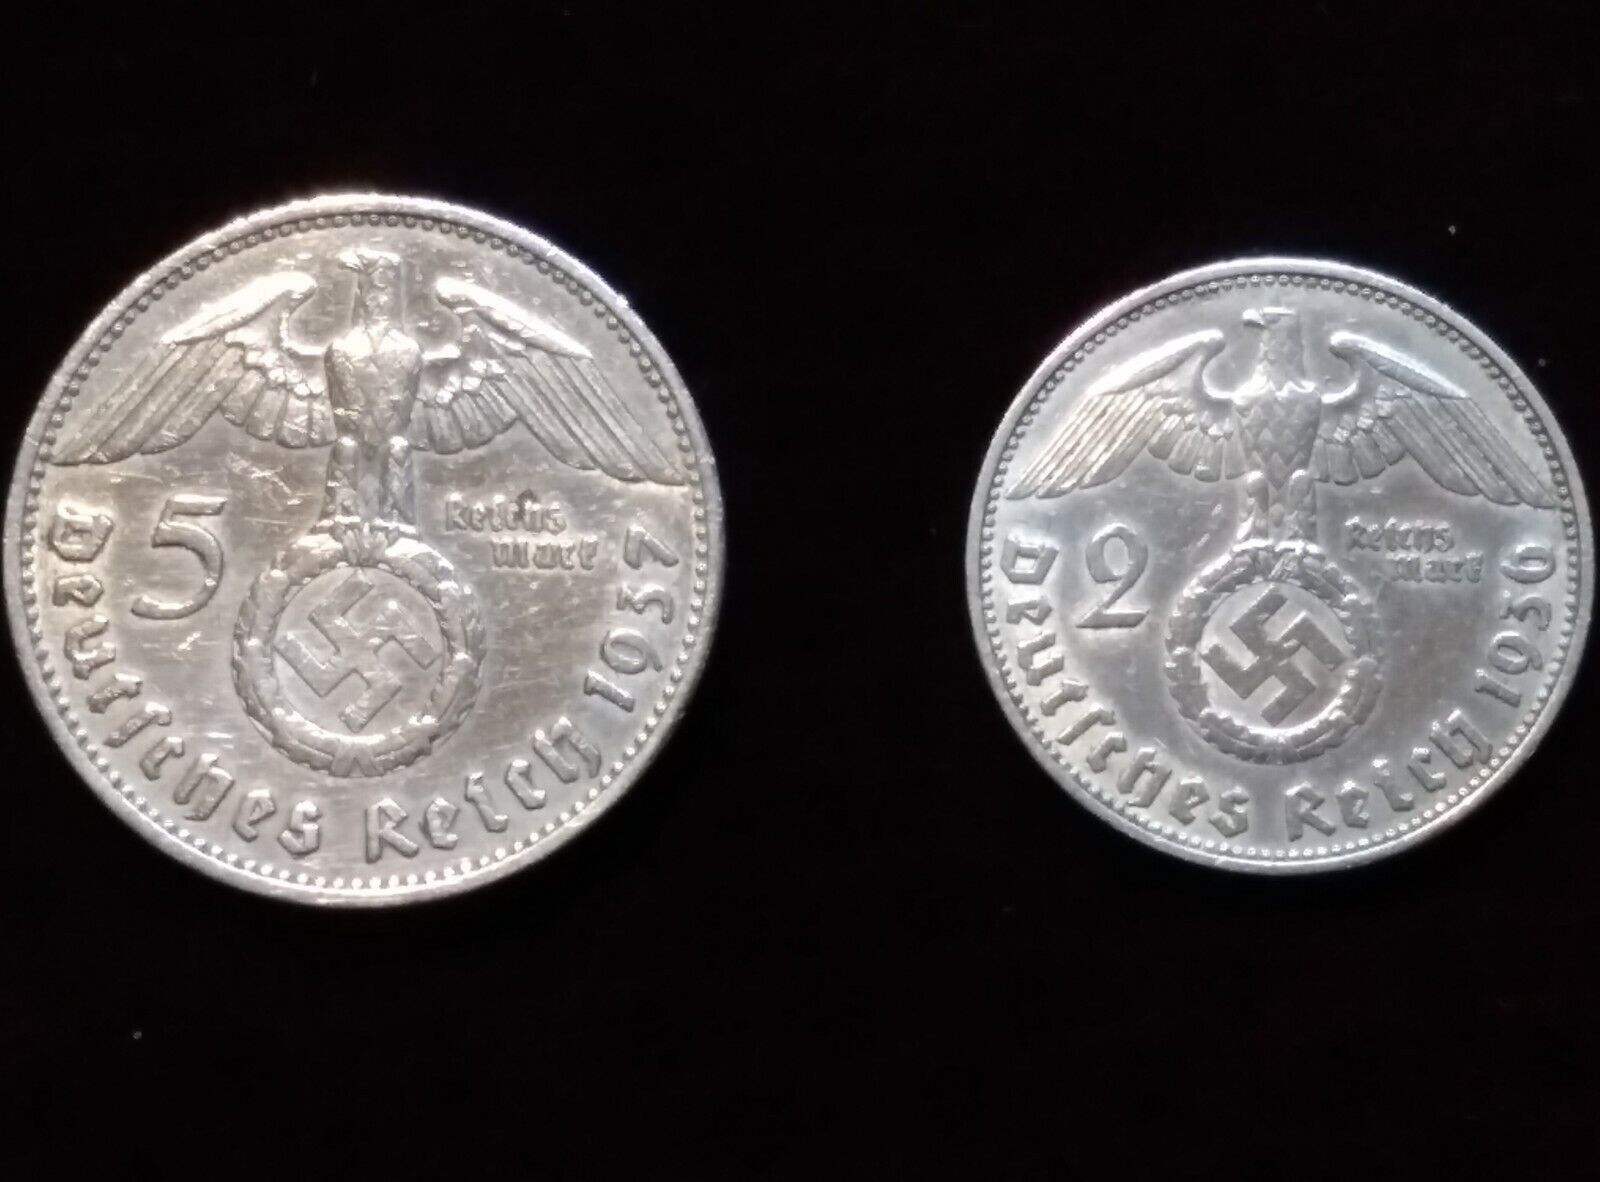  WW2 German Silver Reichsmarks